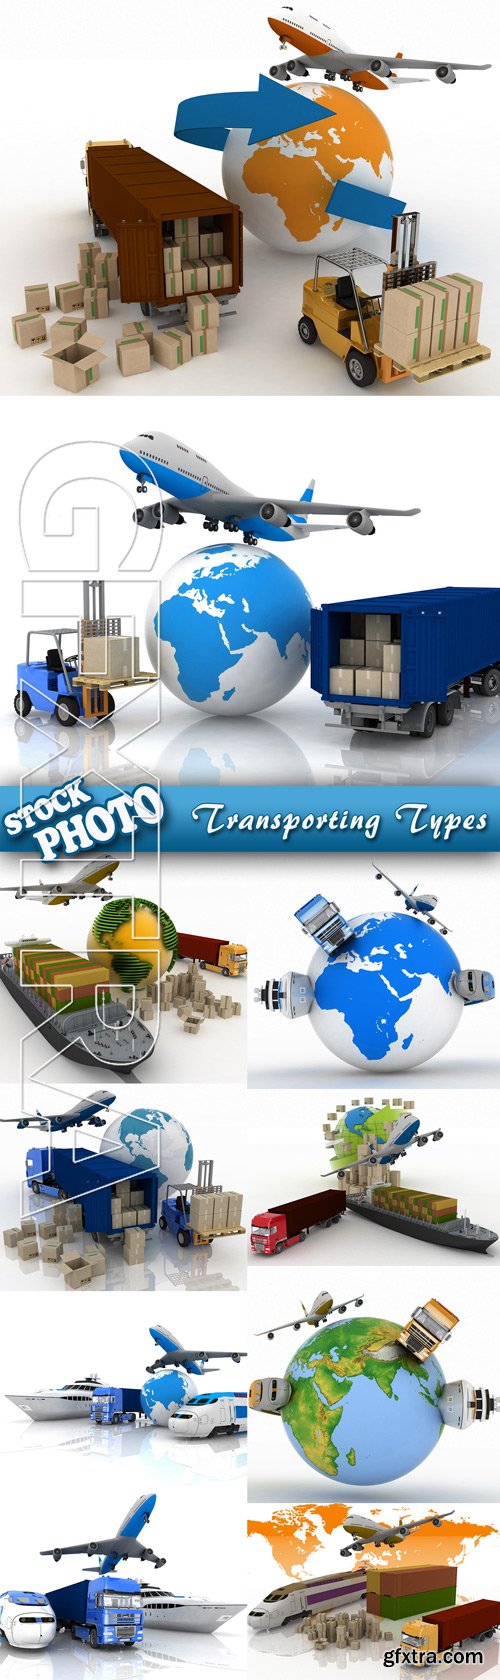 Stock Photo - Transporting Types